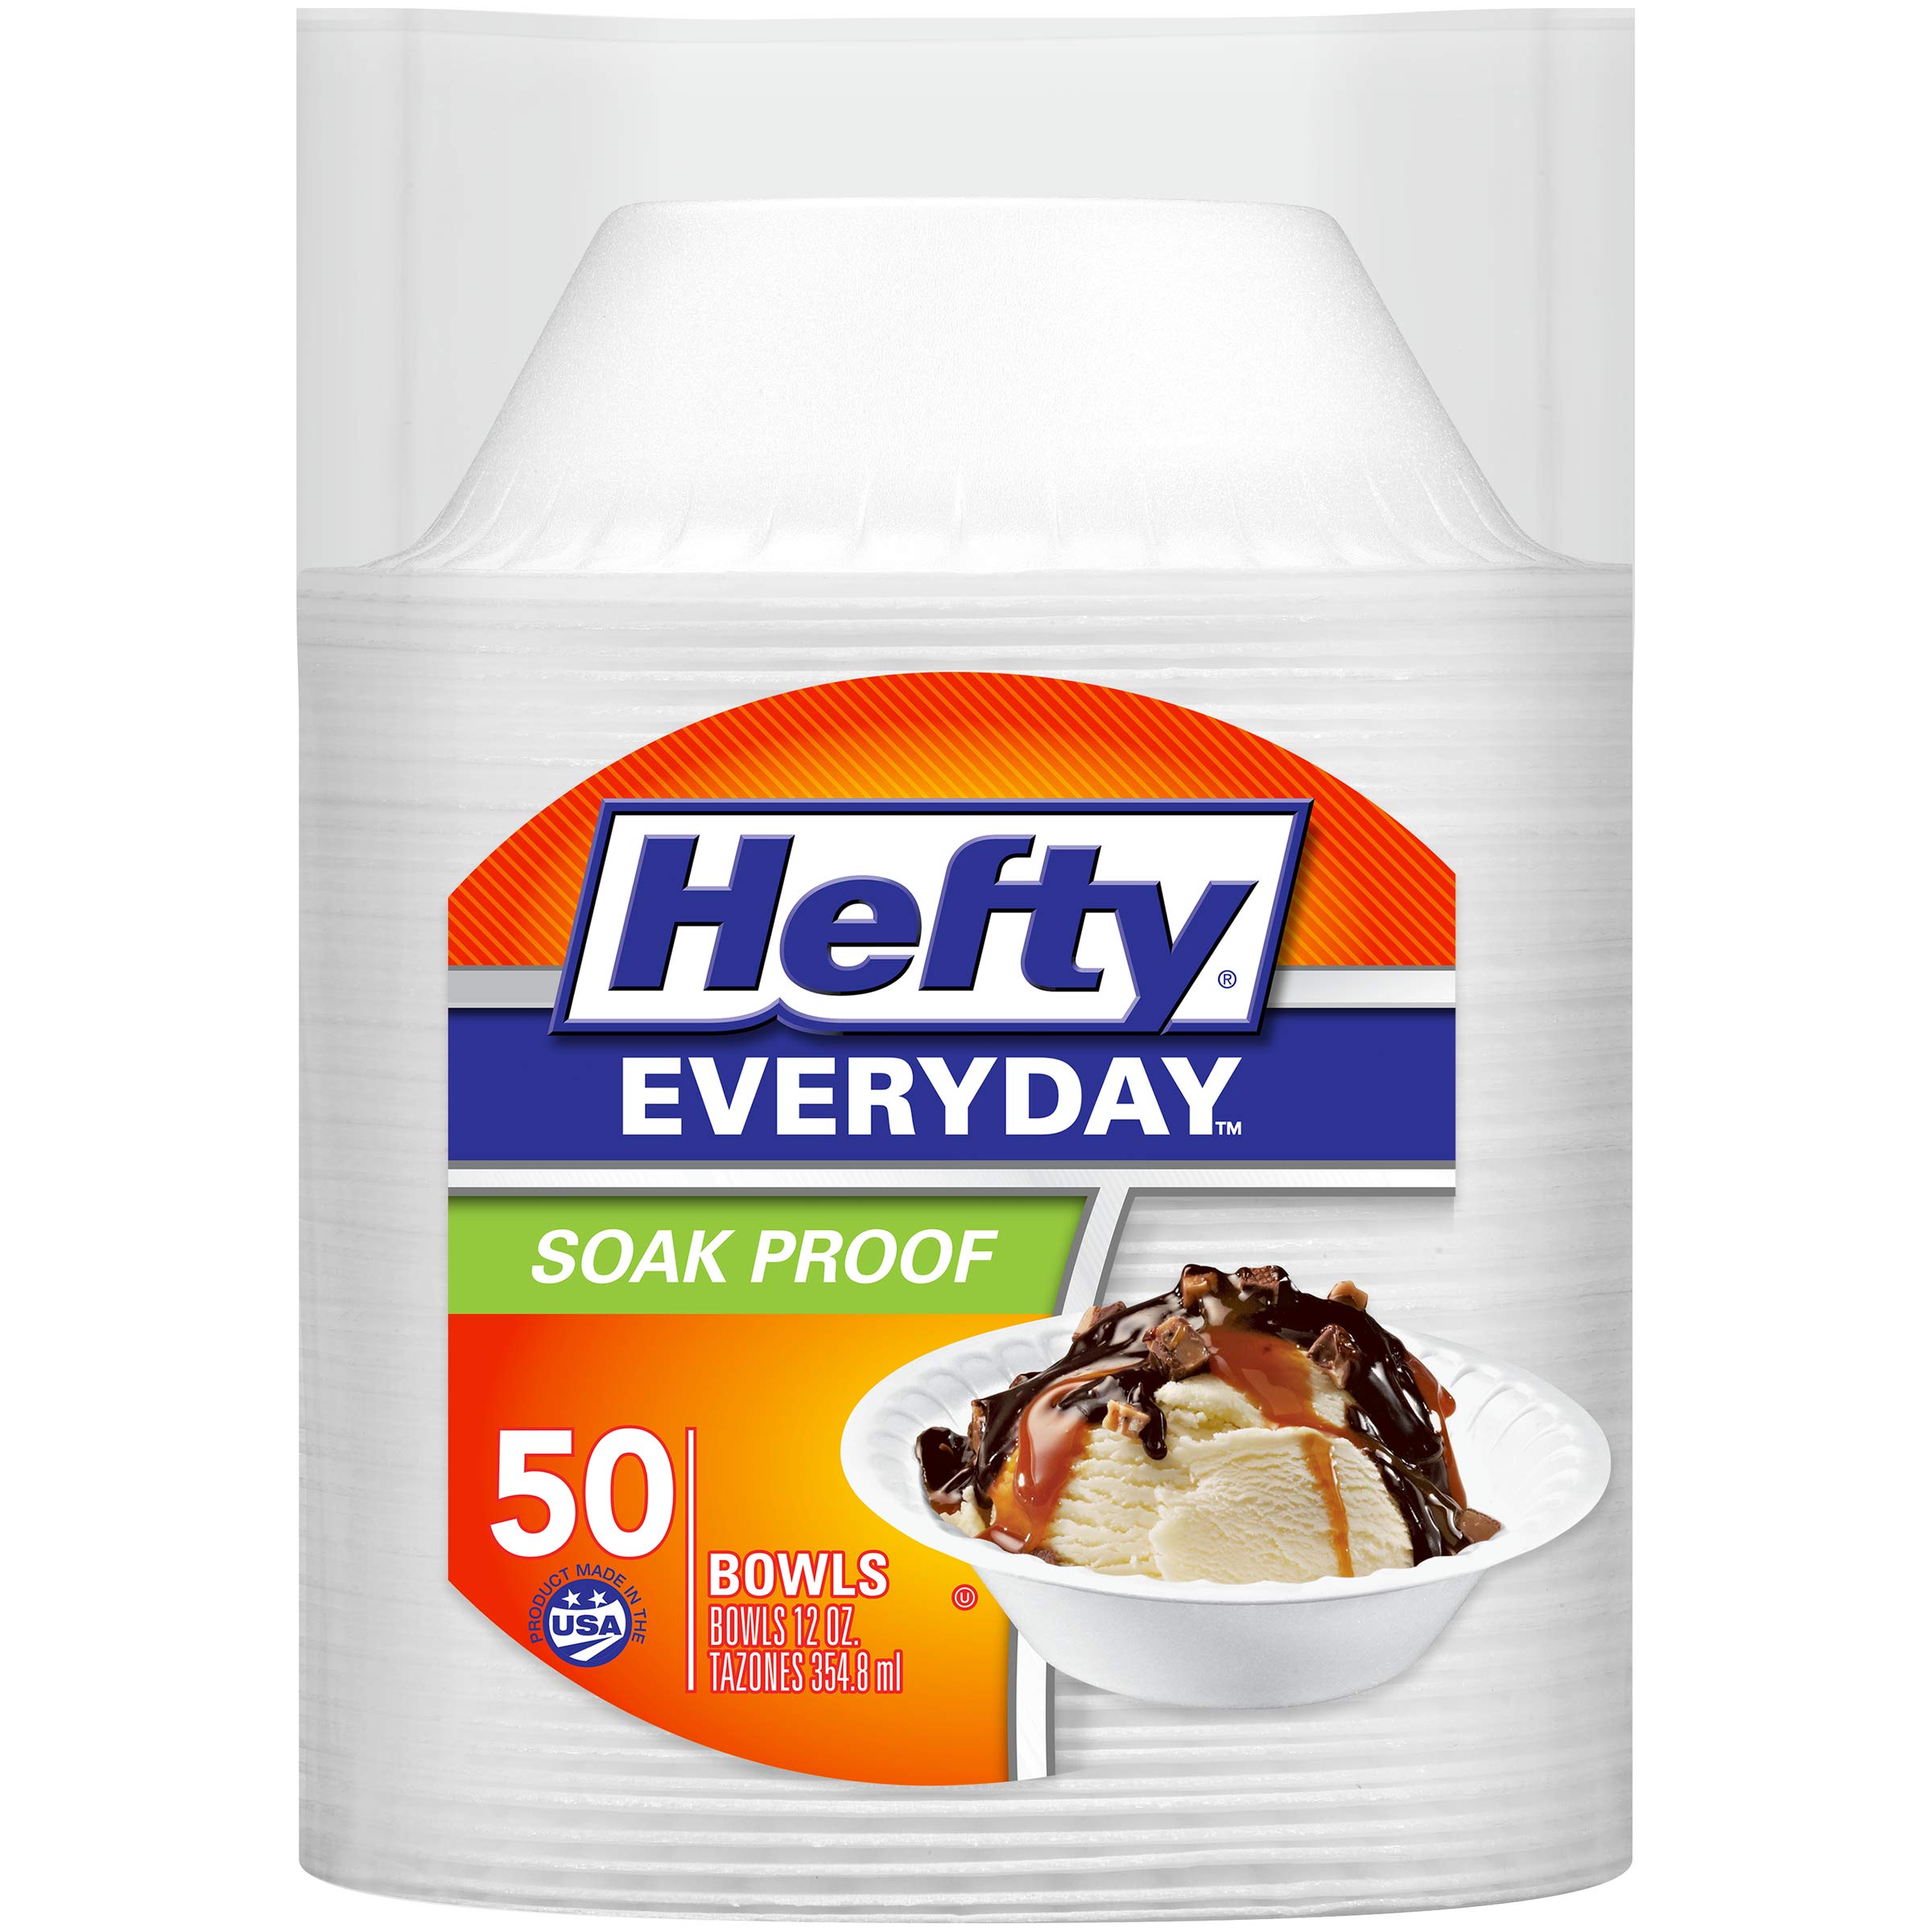 Hefty Everyday Soak-Proof Foam Bowls, 12 Ounce, 50 Count 12oz - 50 Count